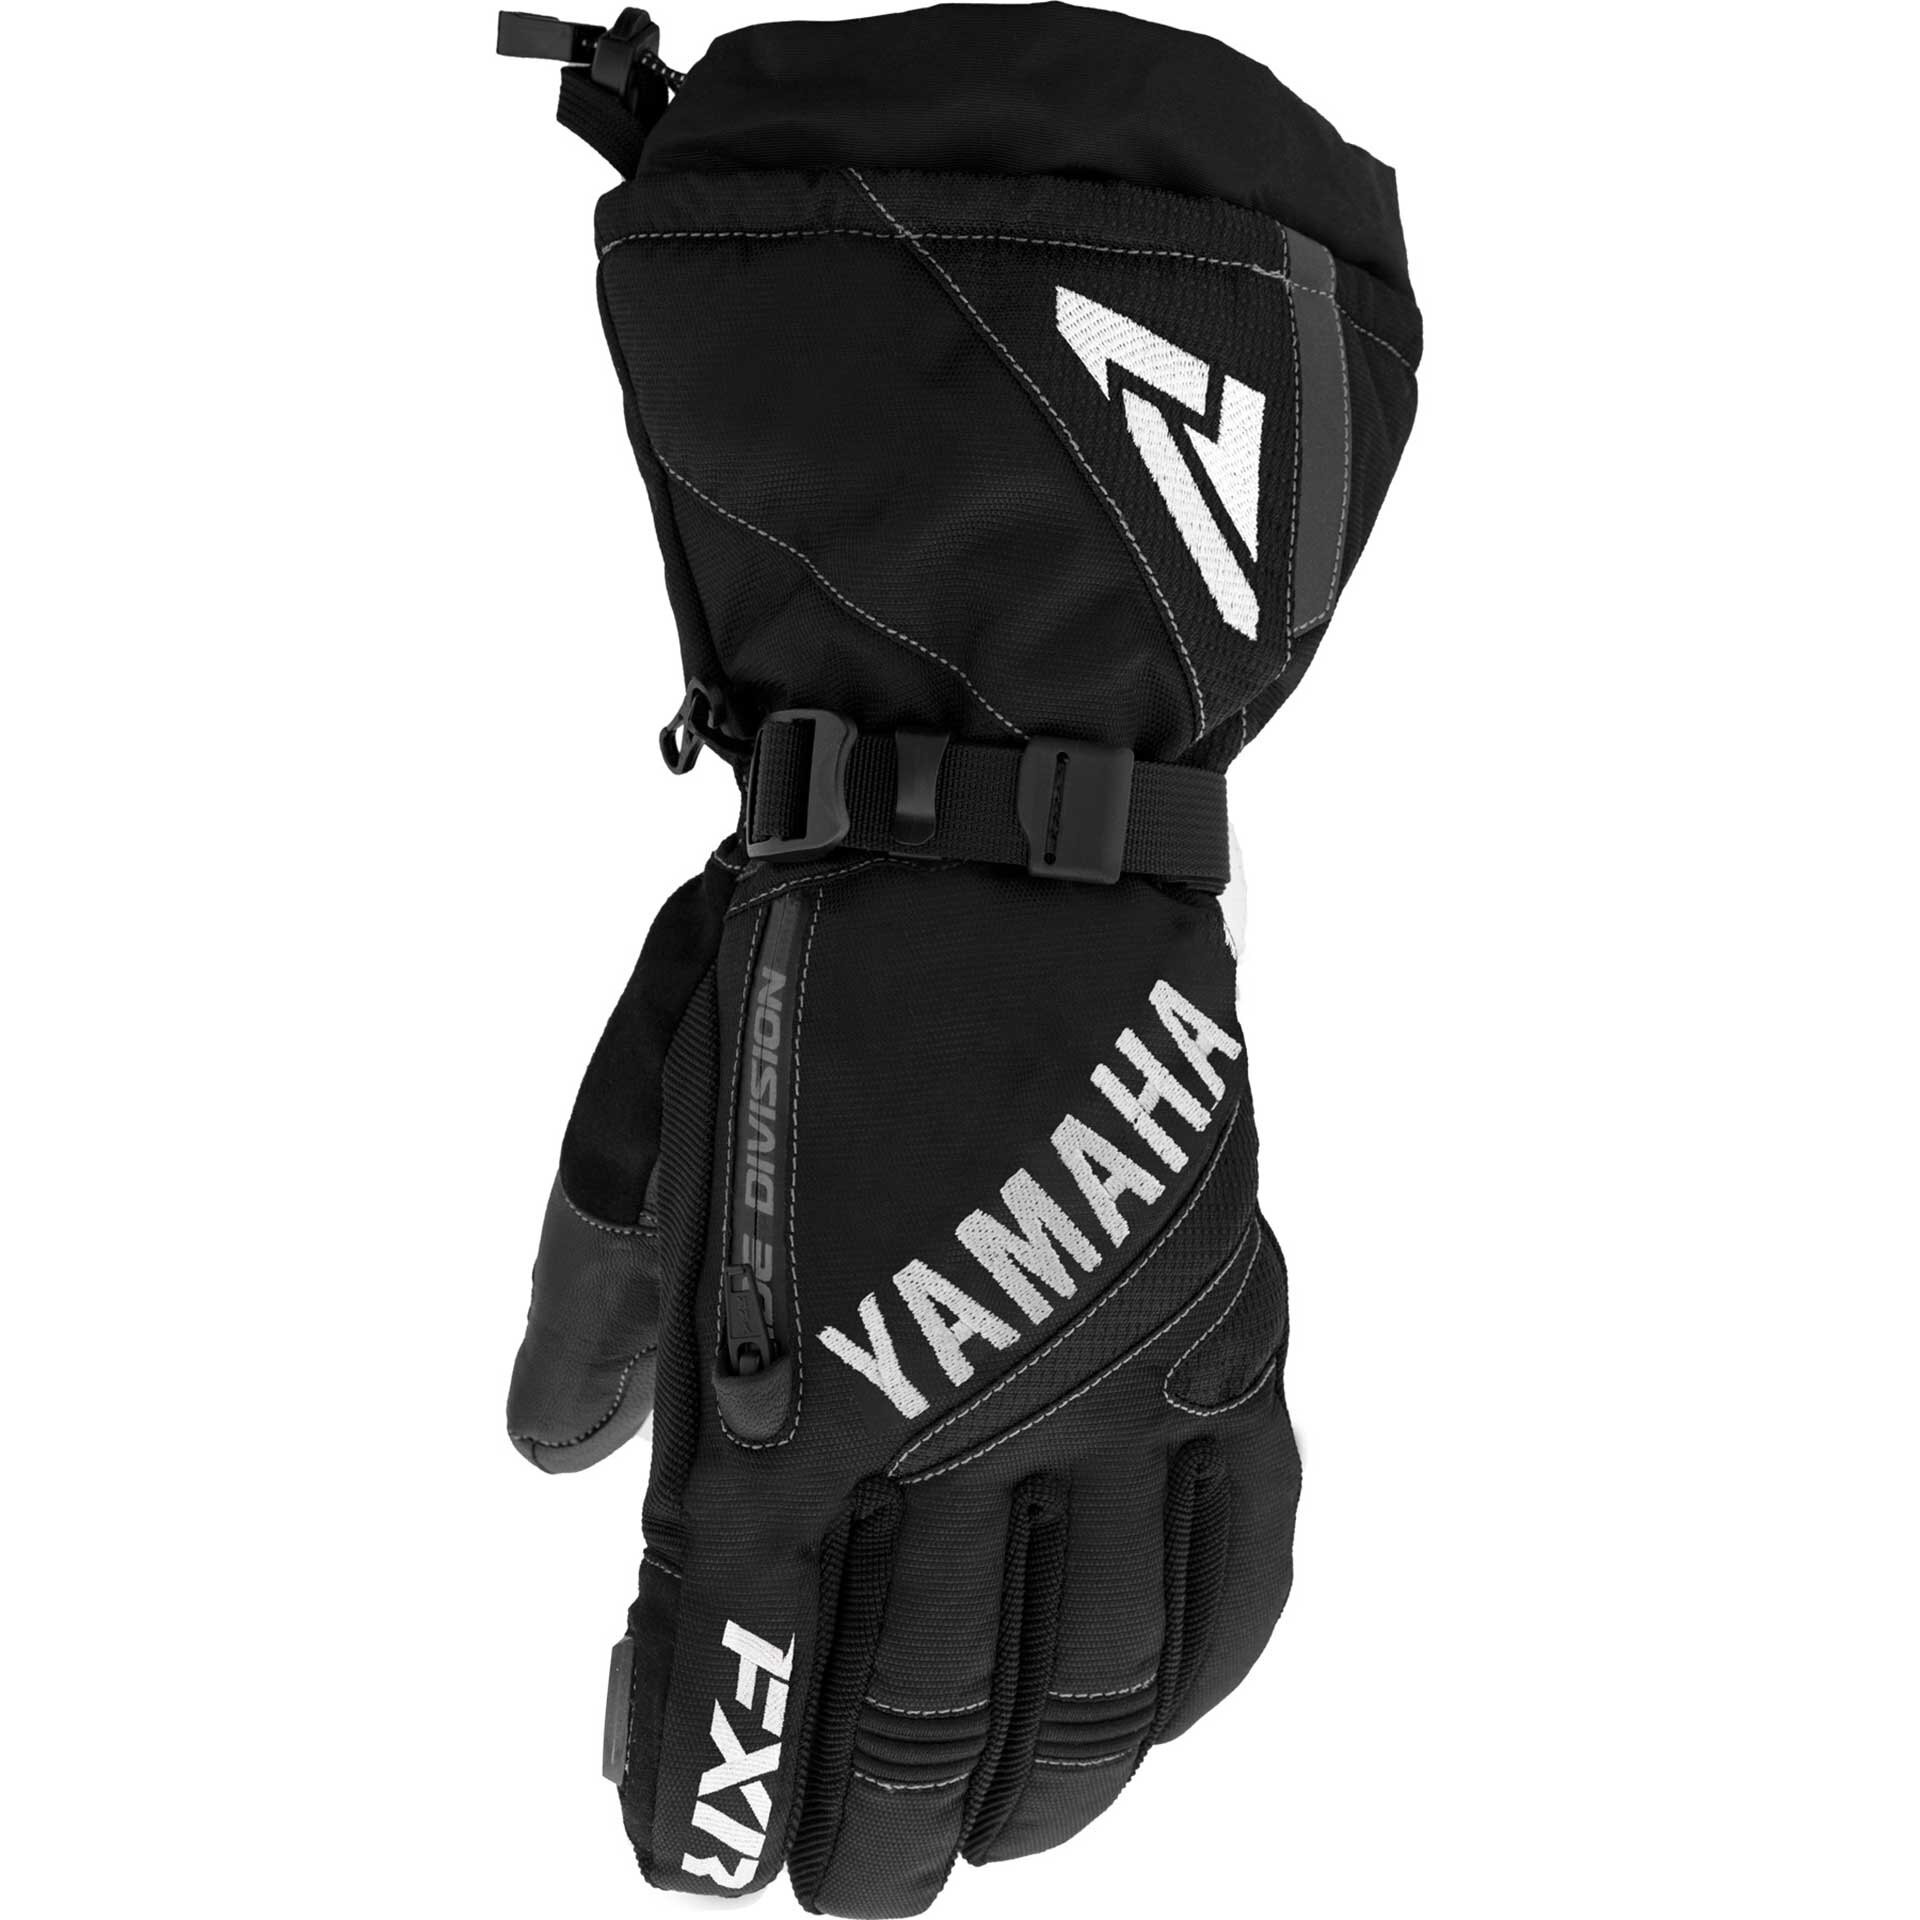 Yamaha Fuel Glove by FXR®